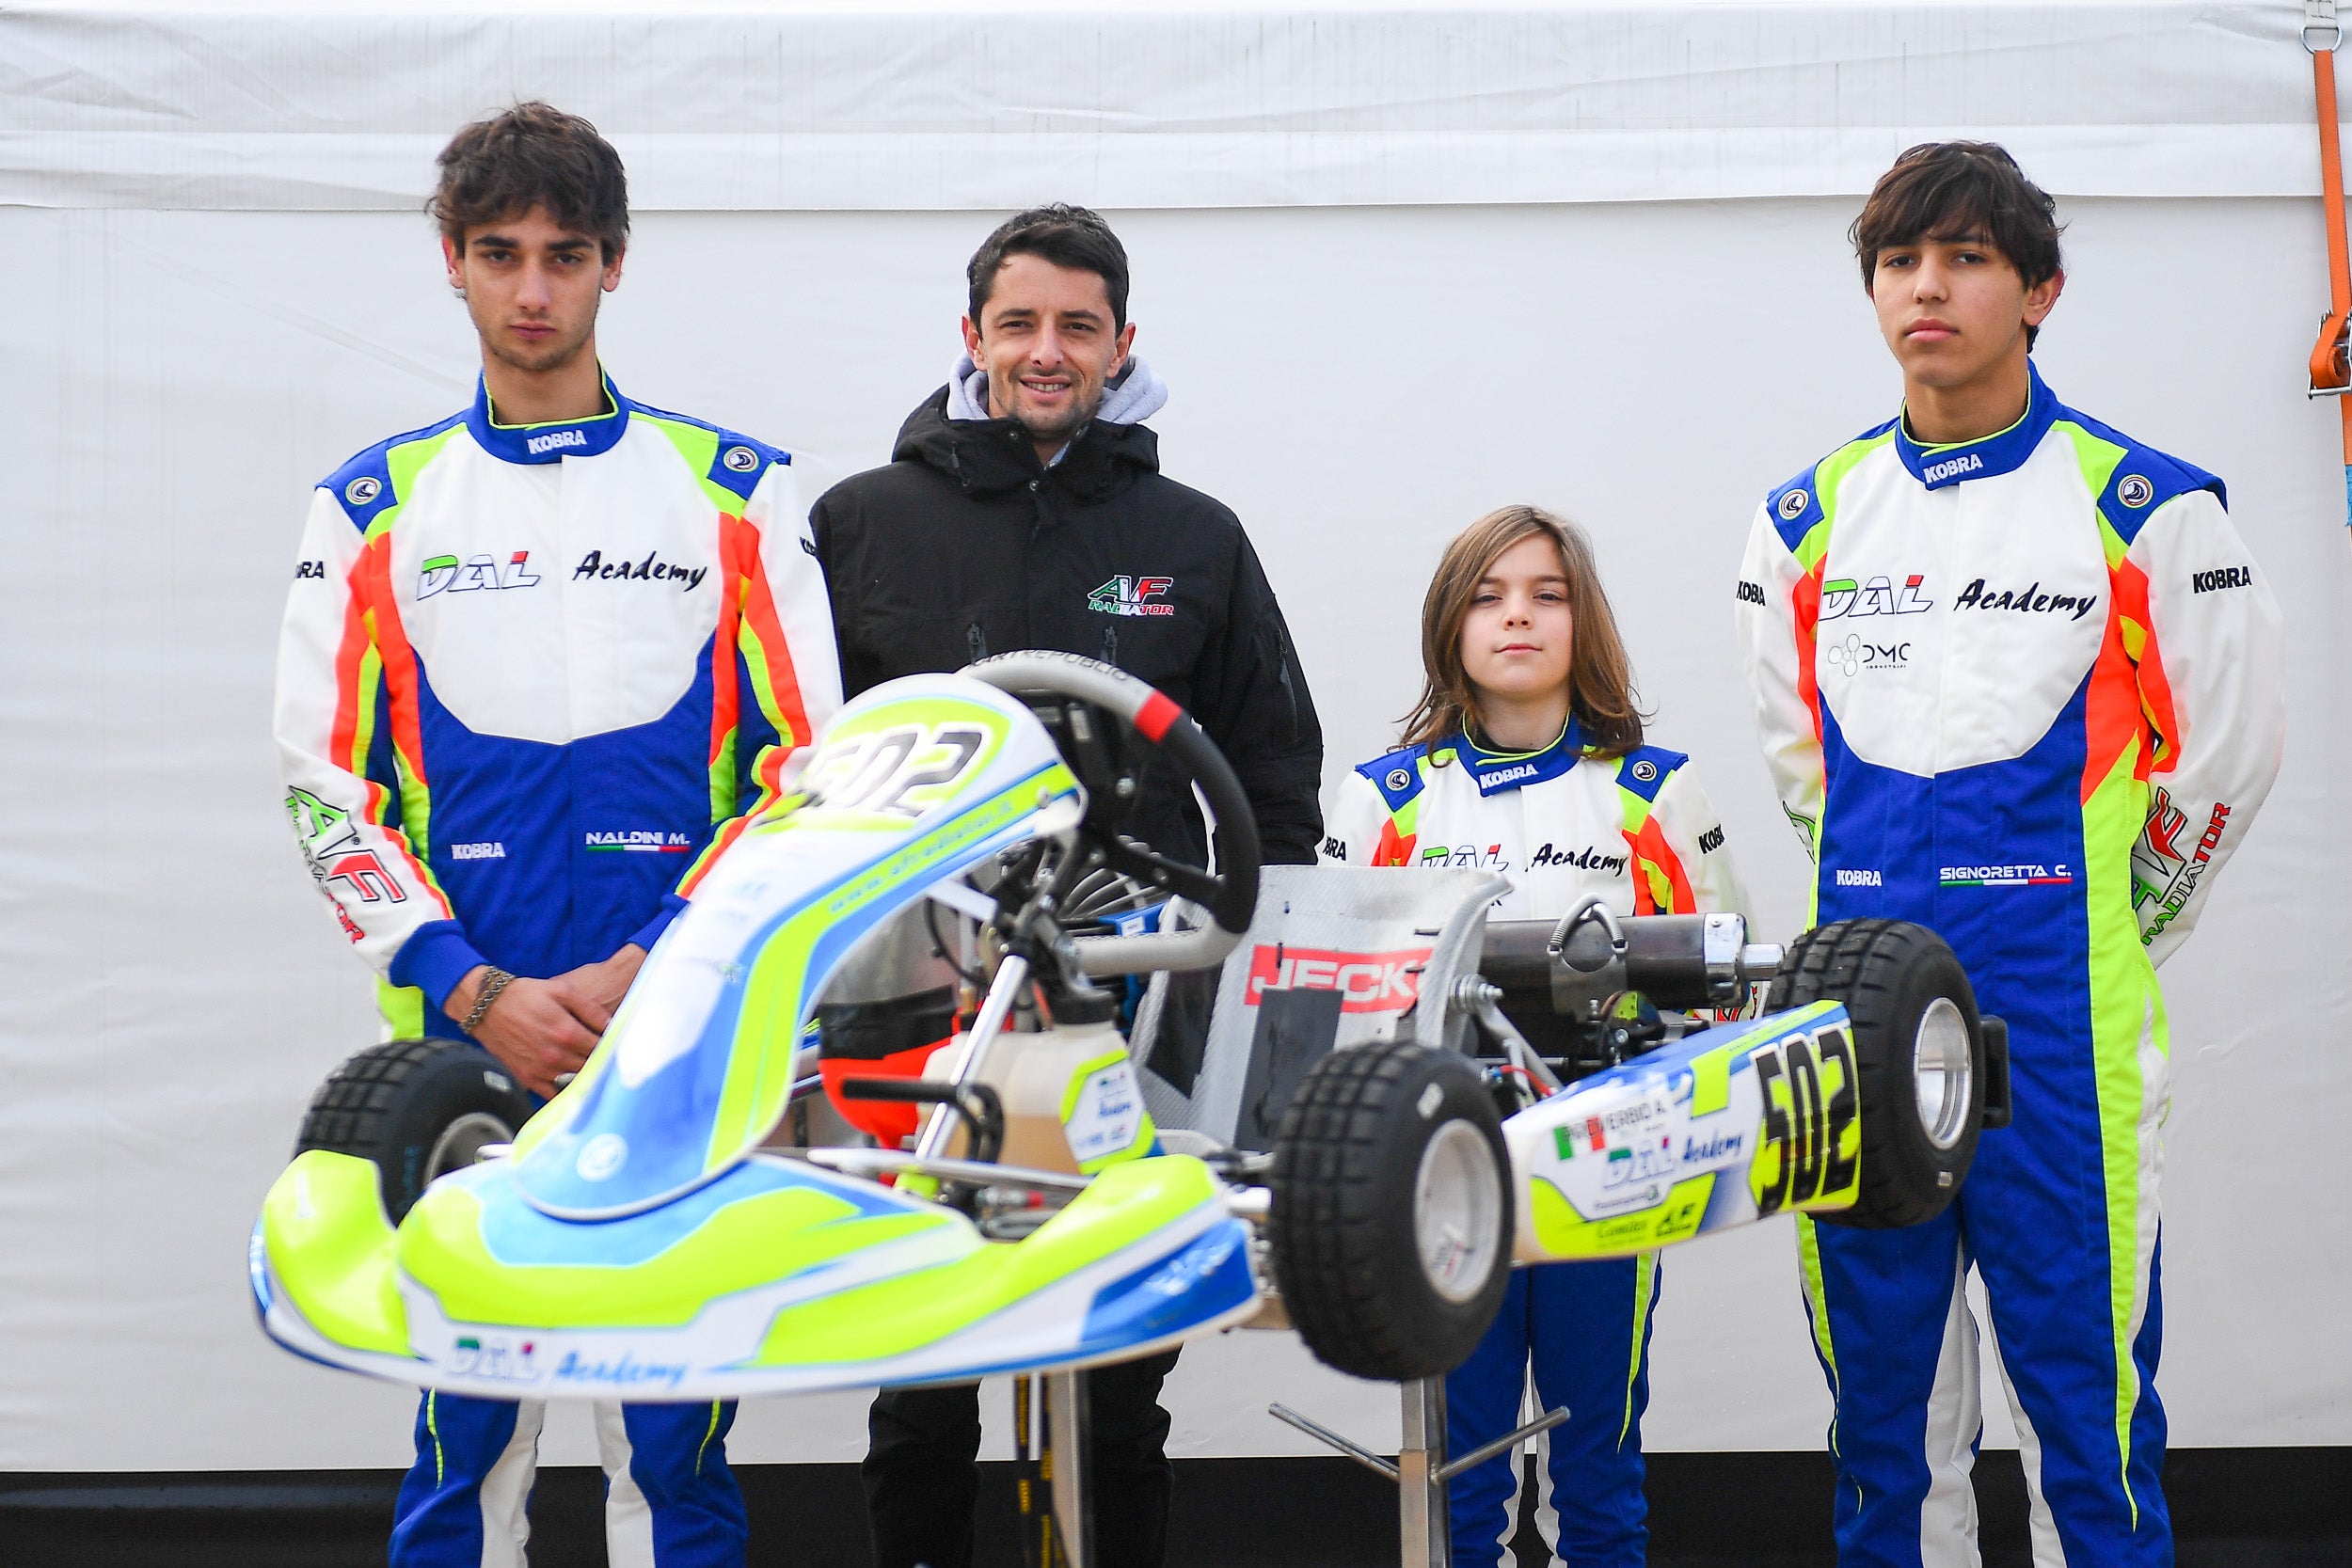 karting school dal academy racing team winter cup 2023